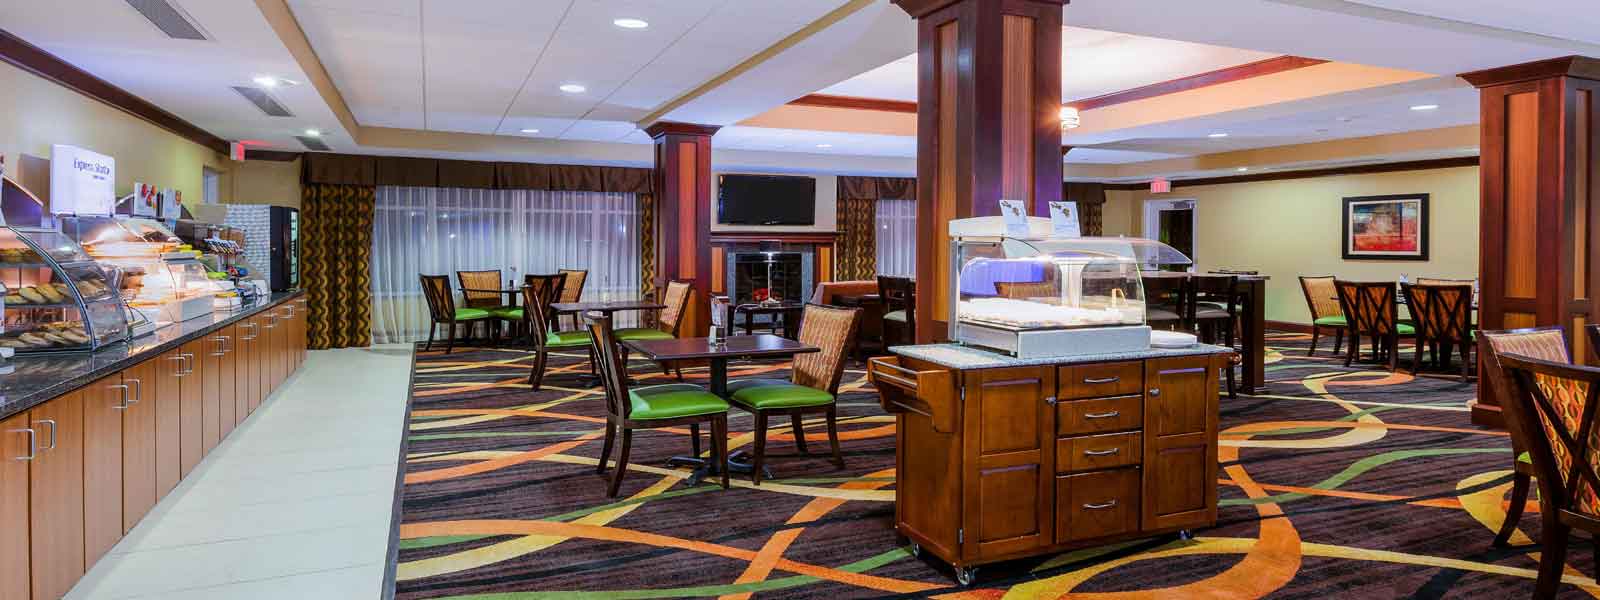 Hotels in Salina Great Rates Trip Advisor